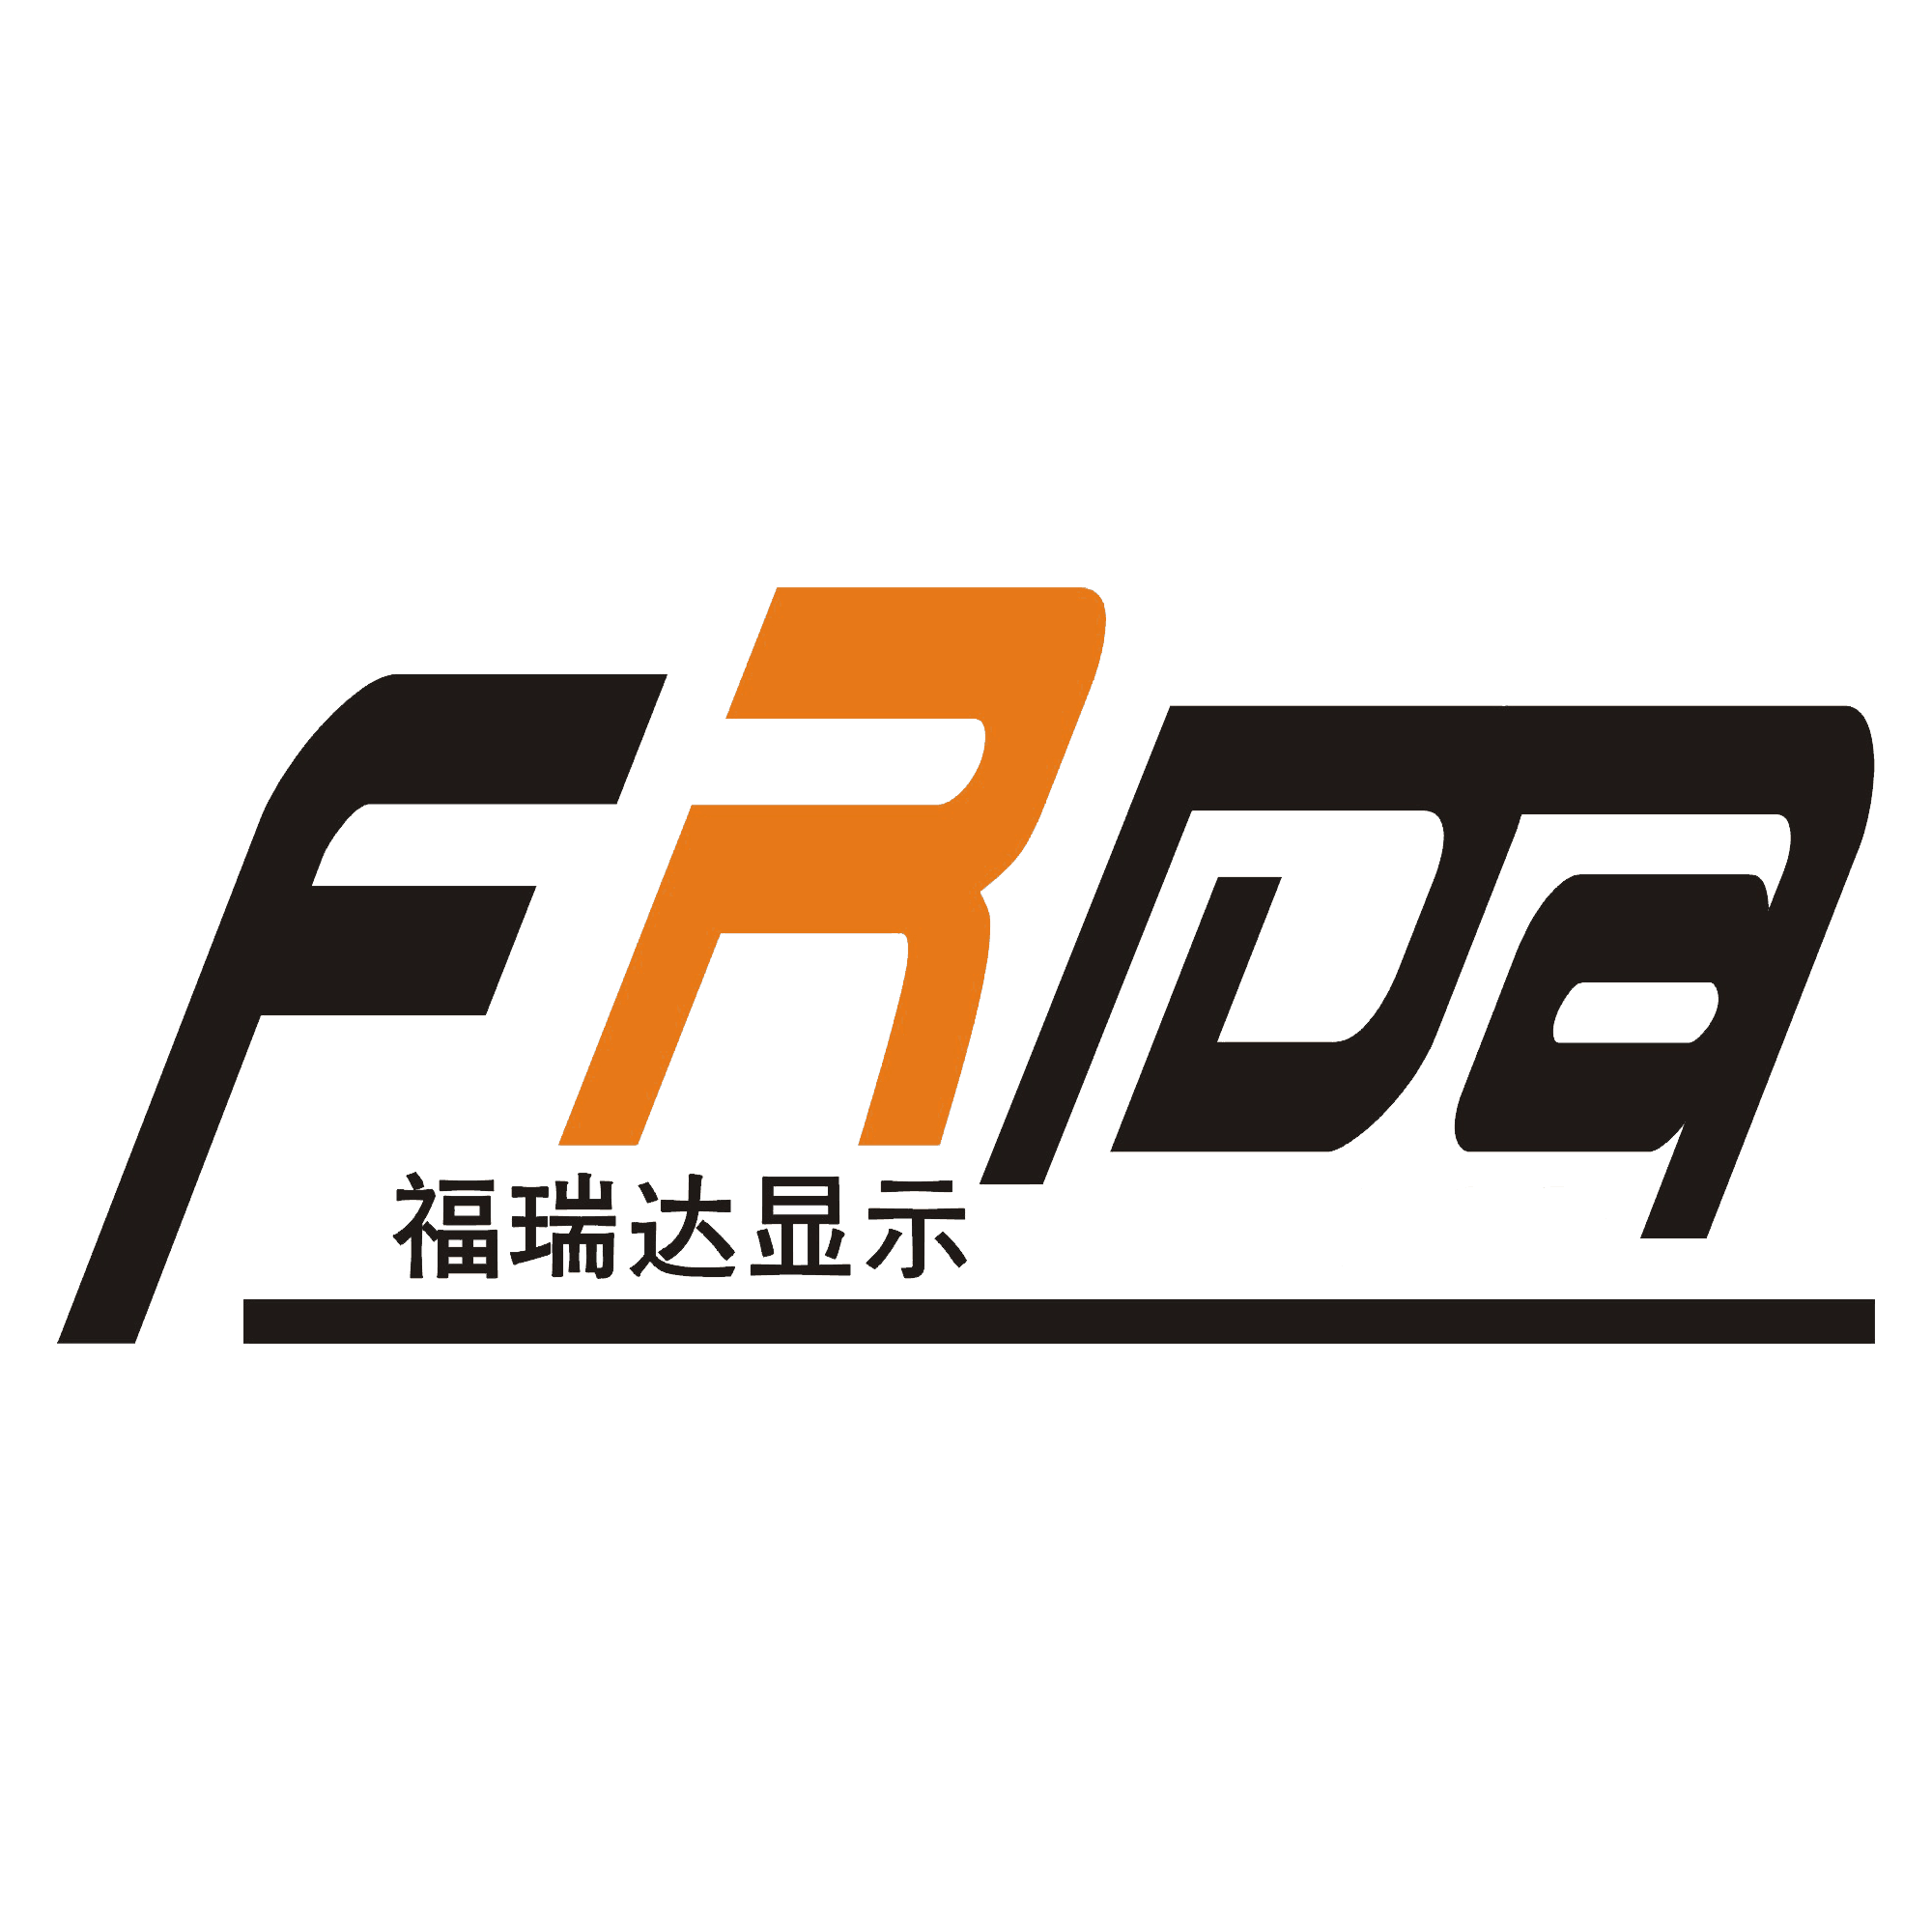 Shenzhen Frida LCD Co., Ltd